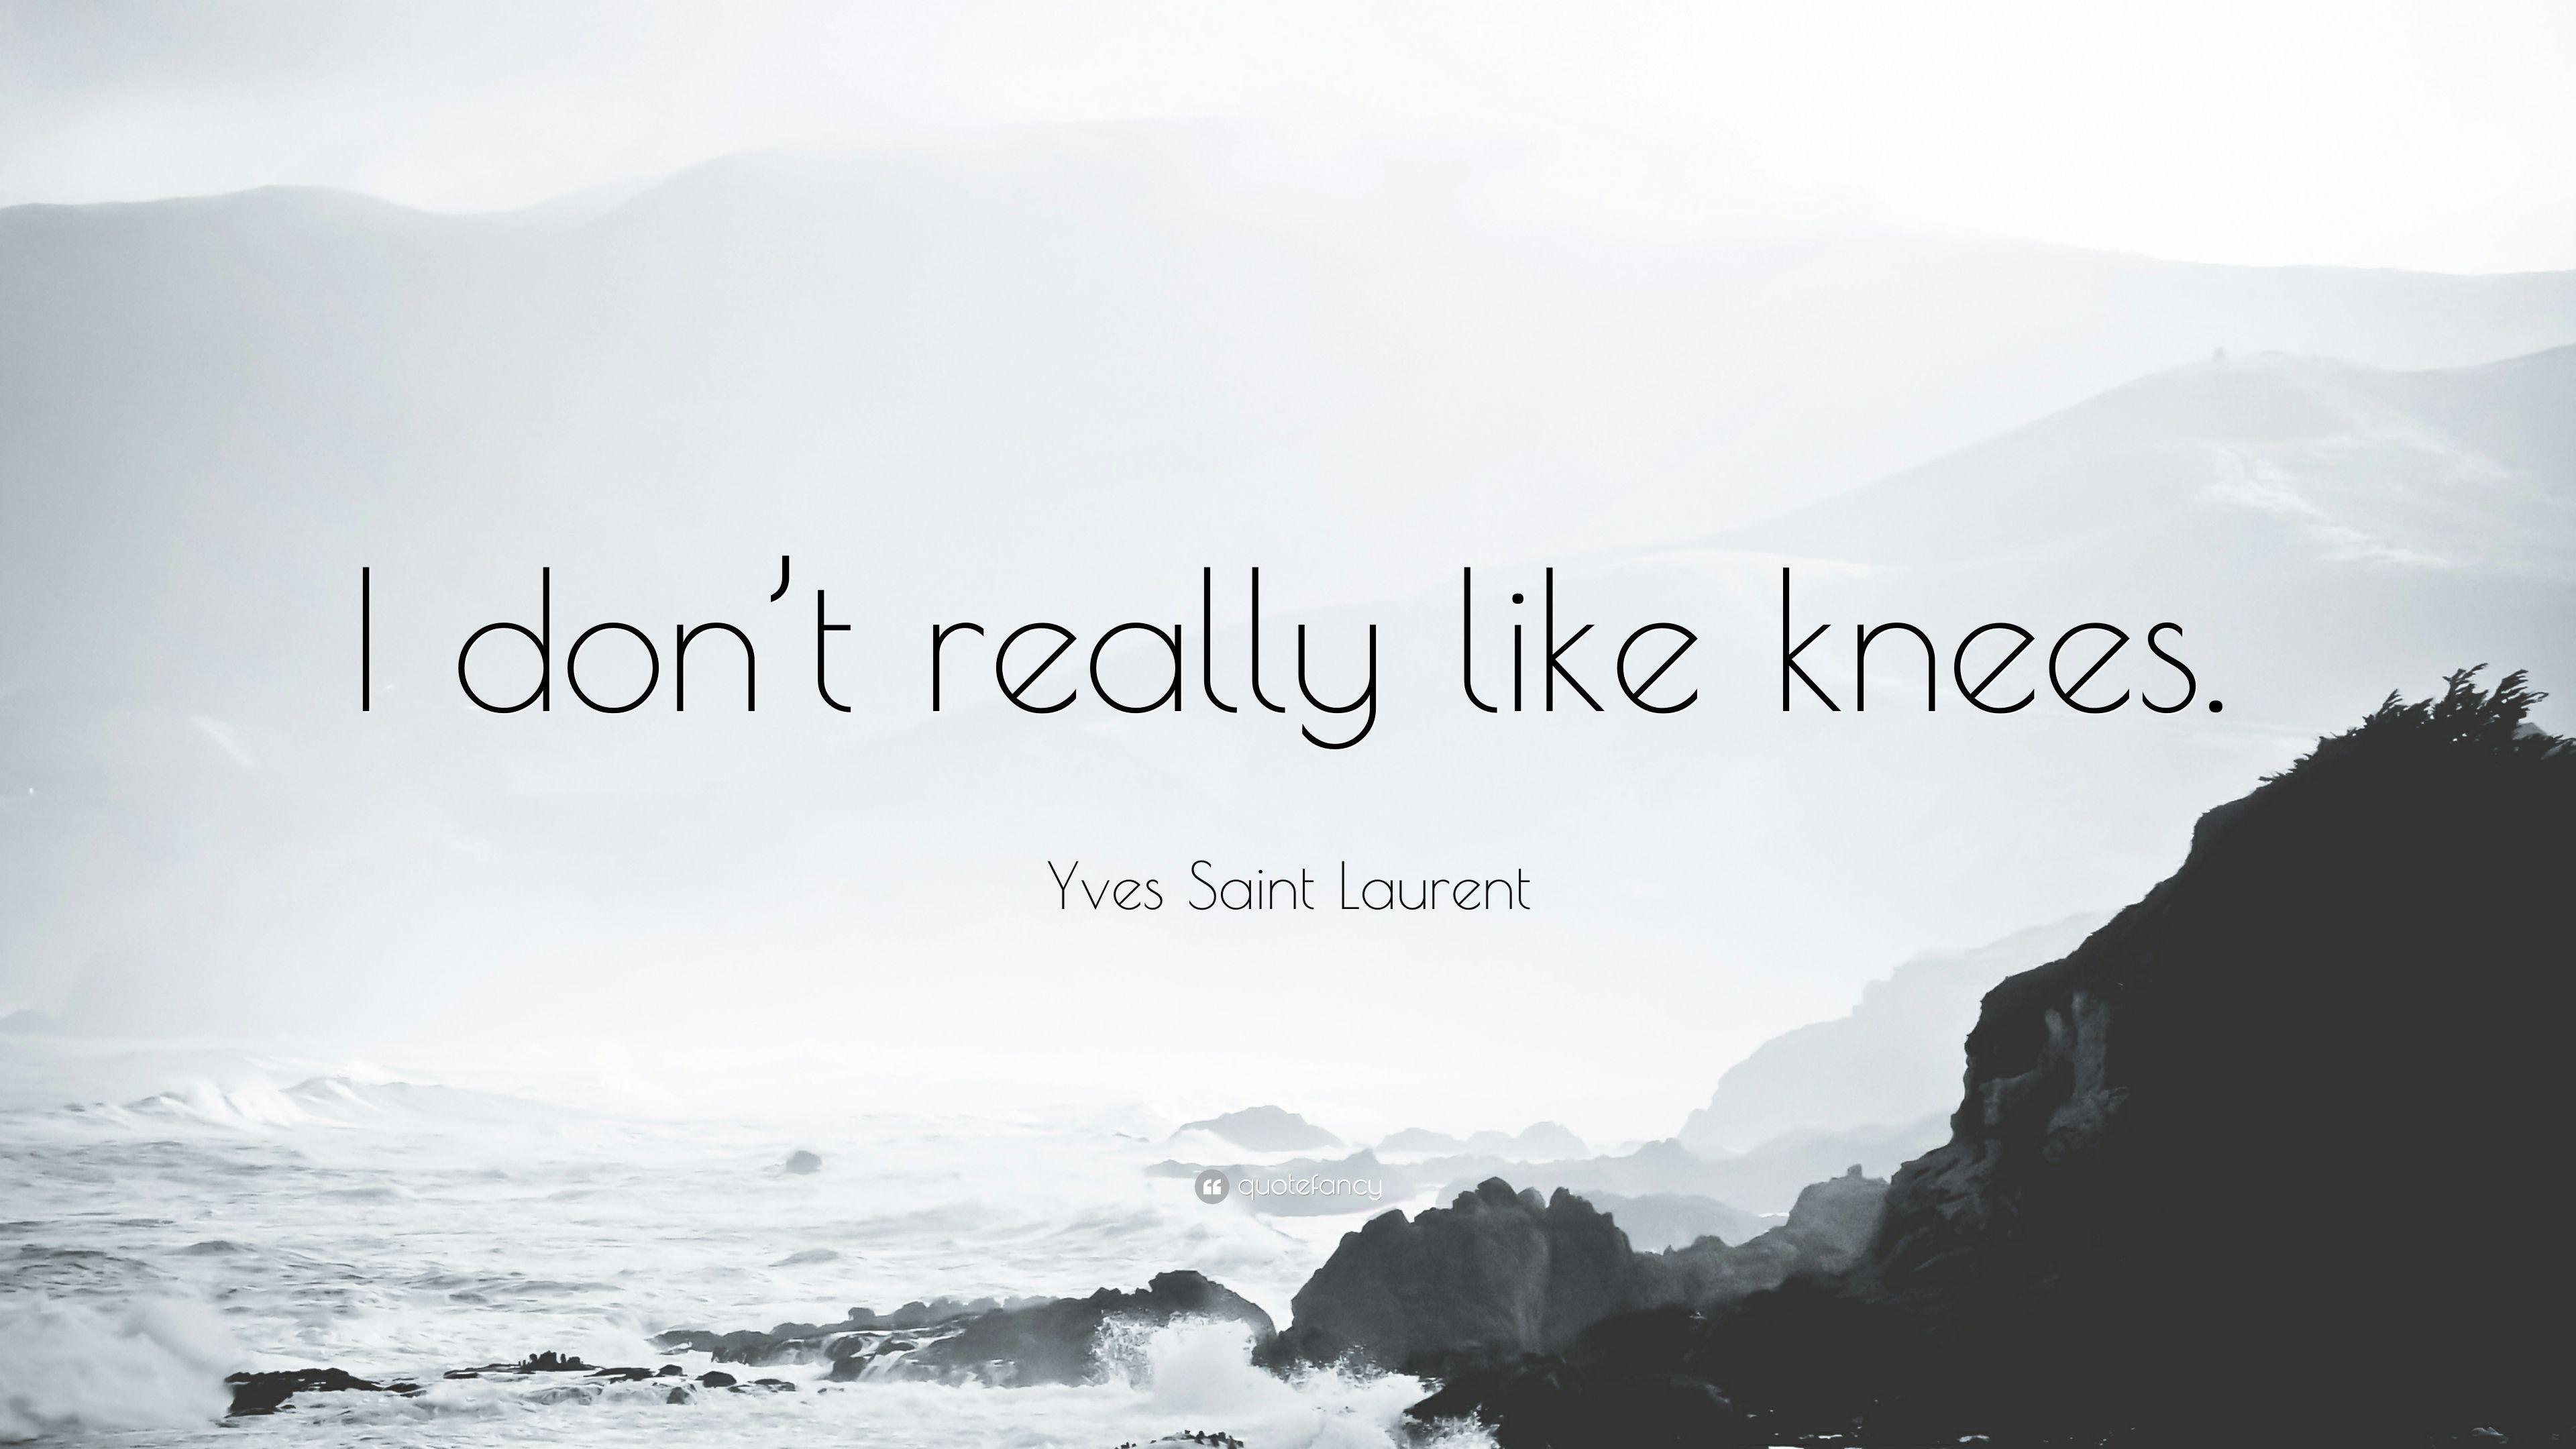 Yves Saint Laurent Quote: “I don't really like knees.” 7 wallpaper